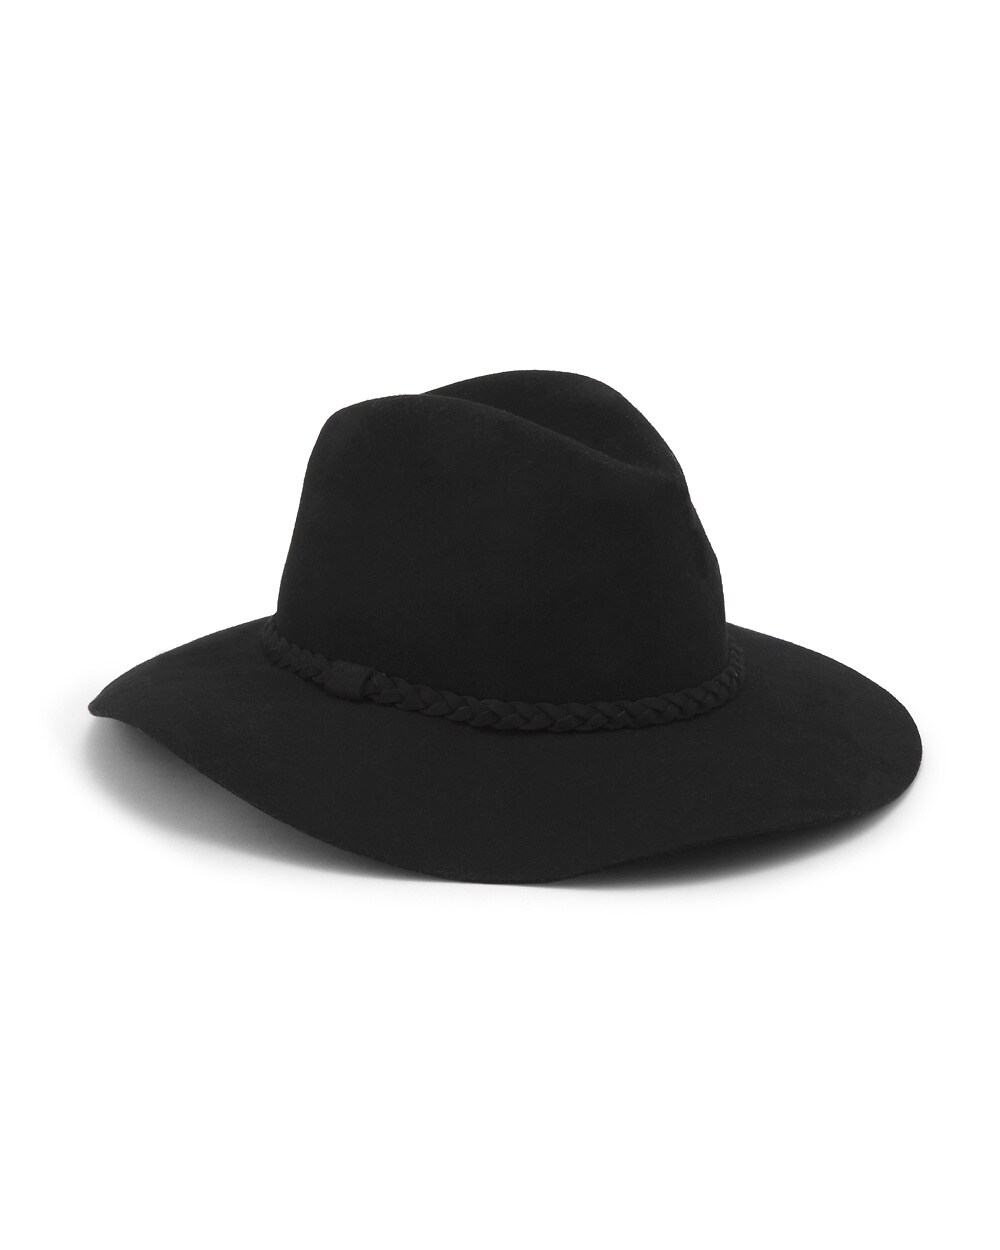 Marisa Black Hat